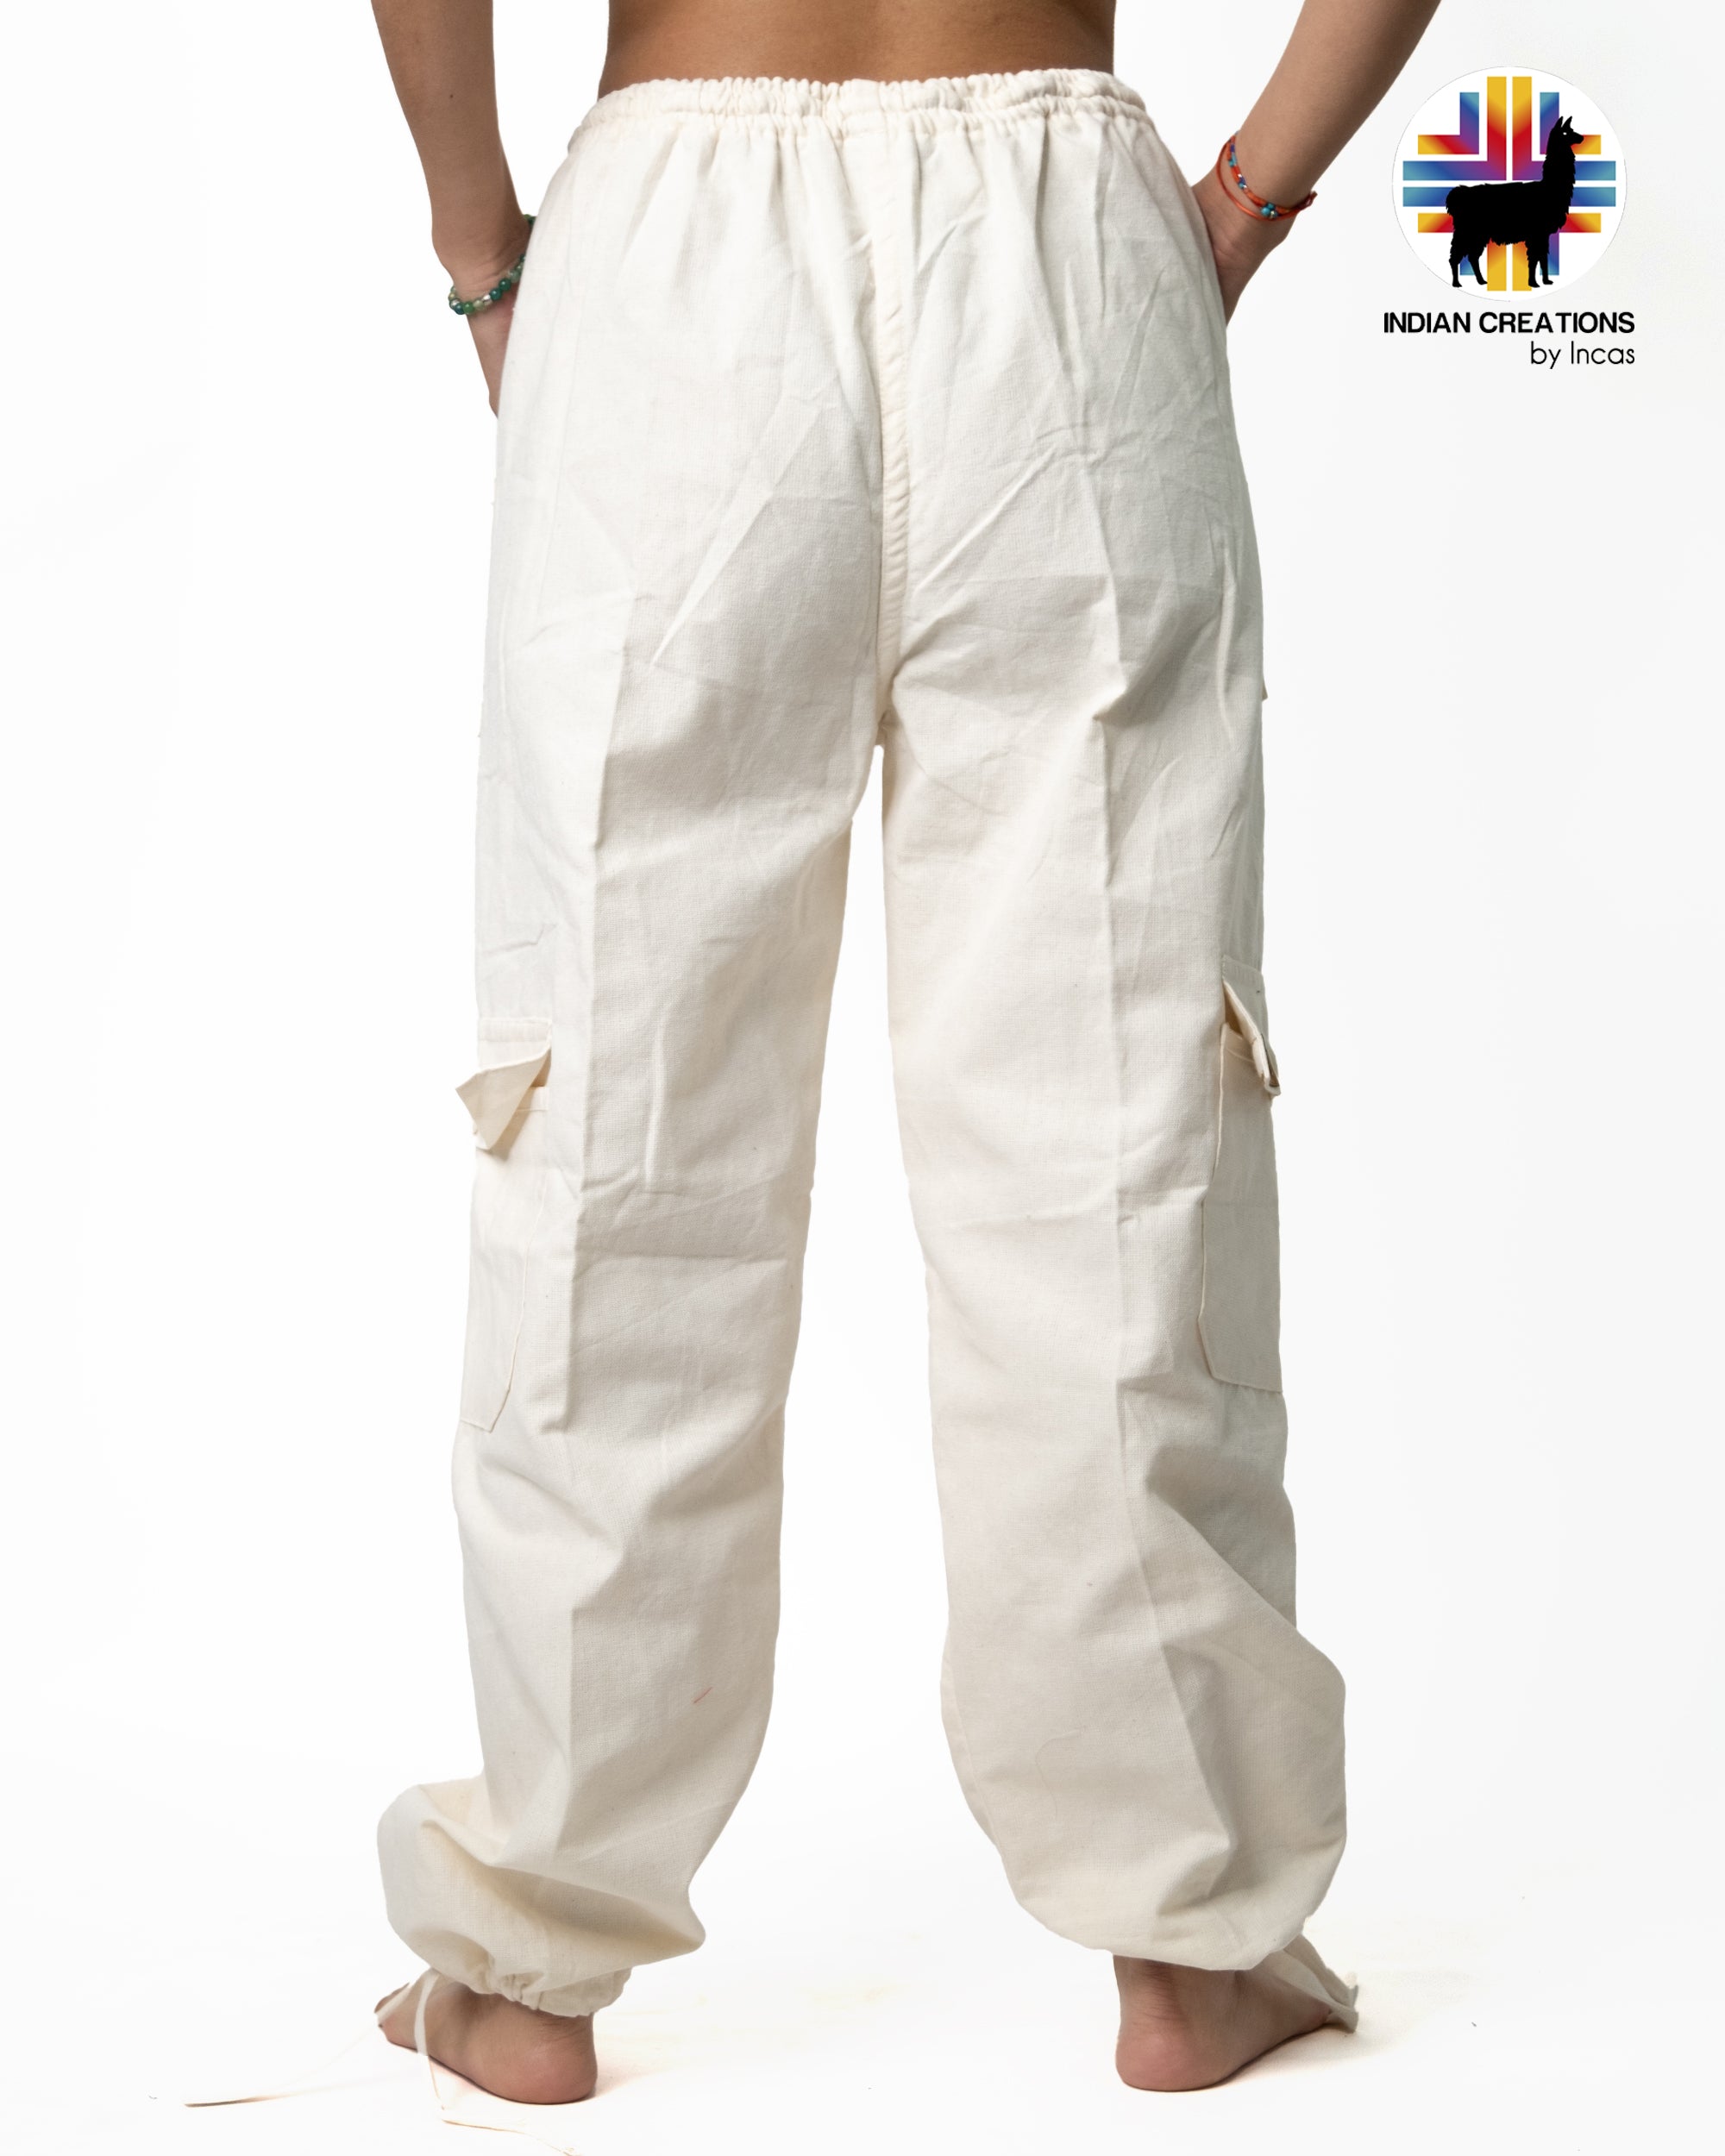 Boho Cotton Pants. Hippie Style Pants.